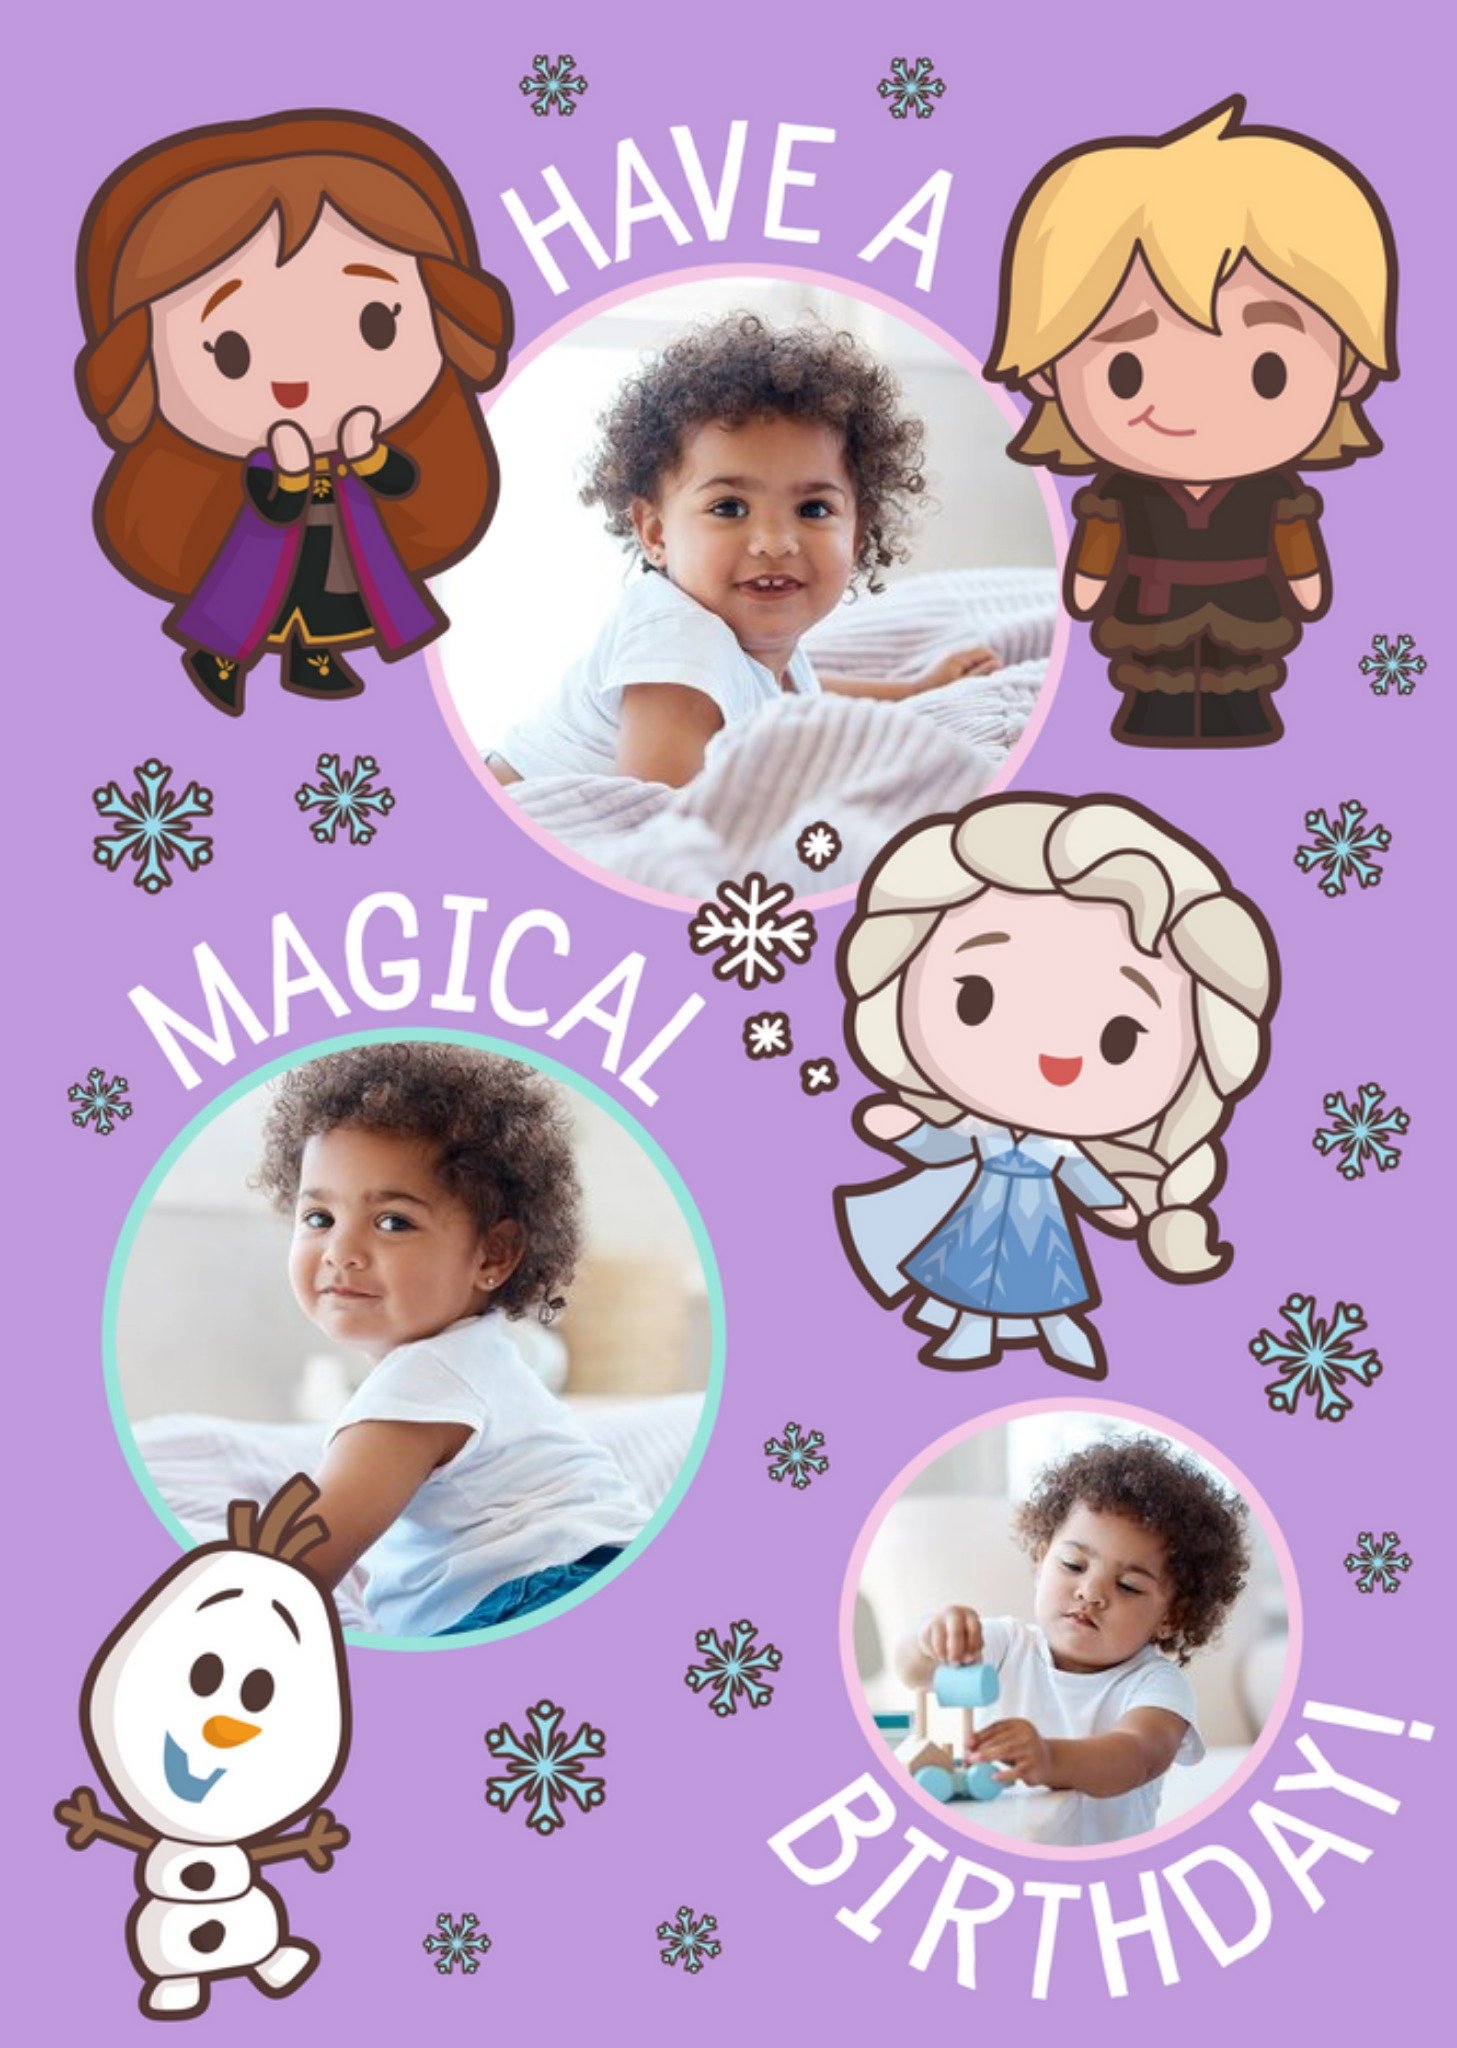 Elsa Olaf Kristof And Anna Magical Disney Frozen Photo Upload Birthday Card, Large